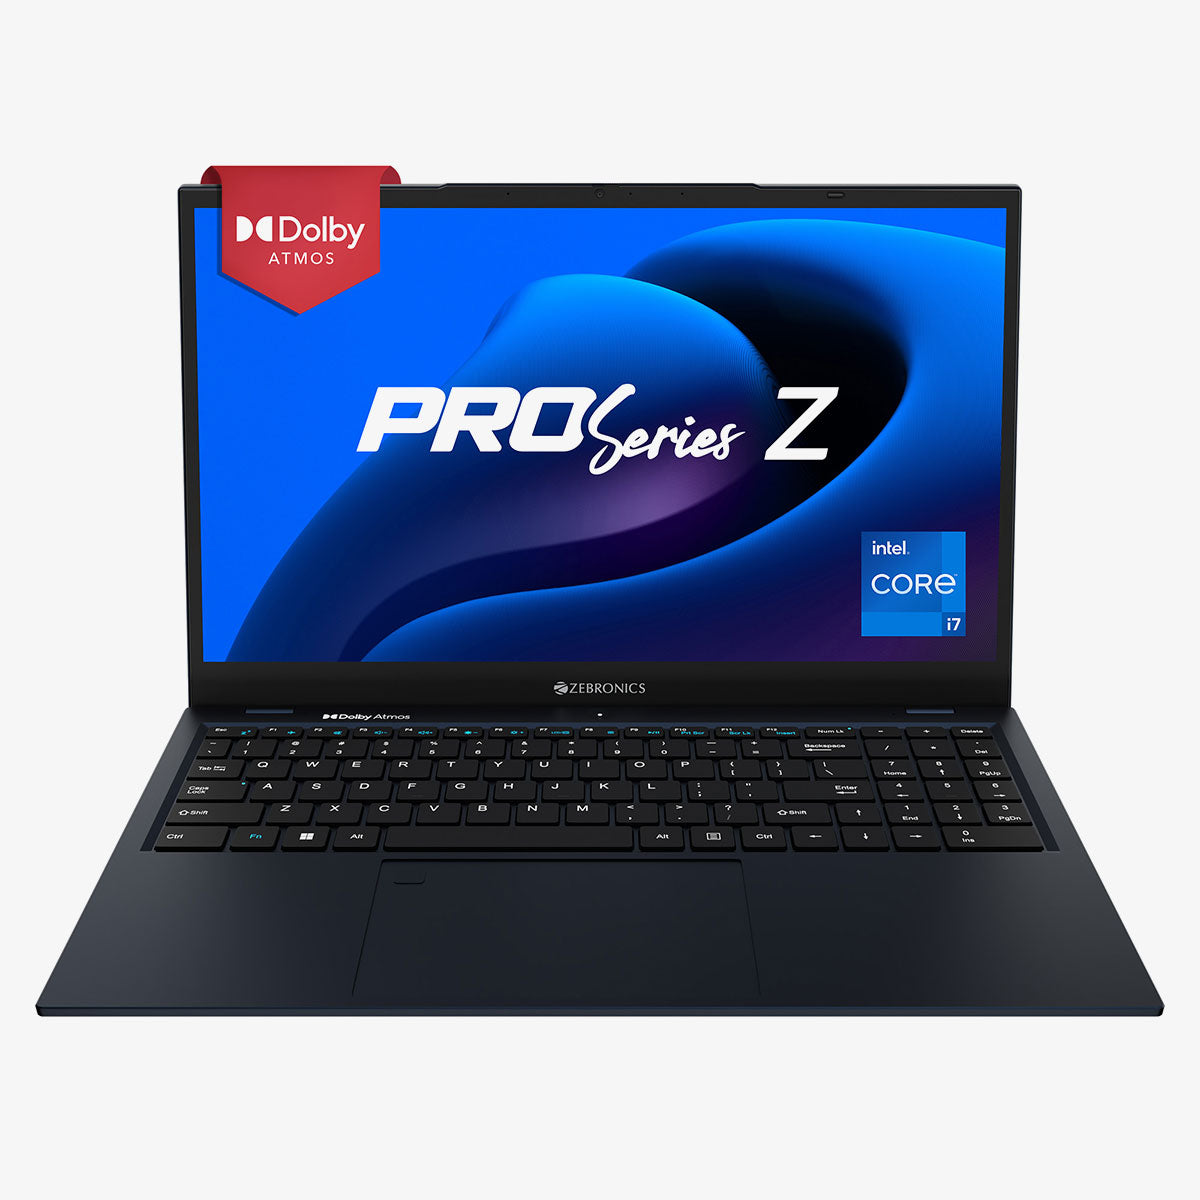 Zeb-NBC 5S - Pro Series Z Laptop - Zebronics